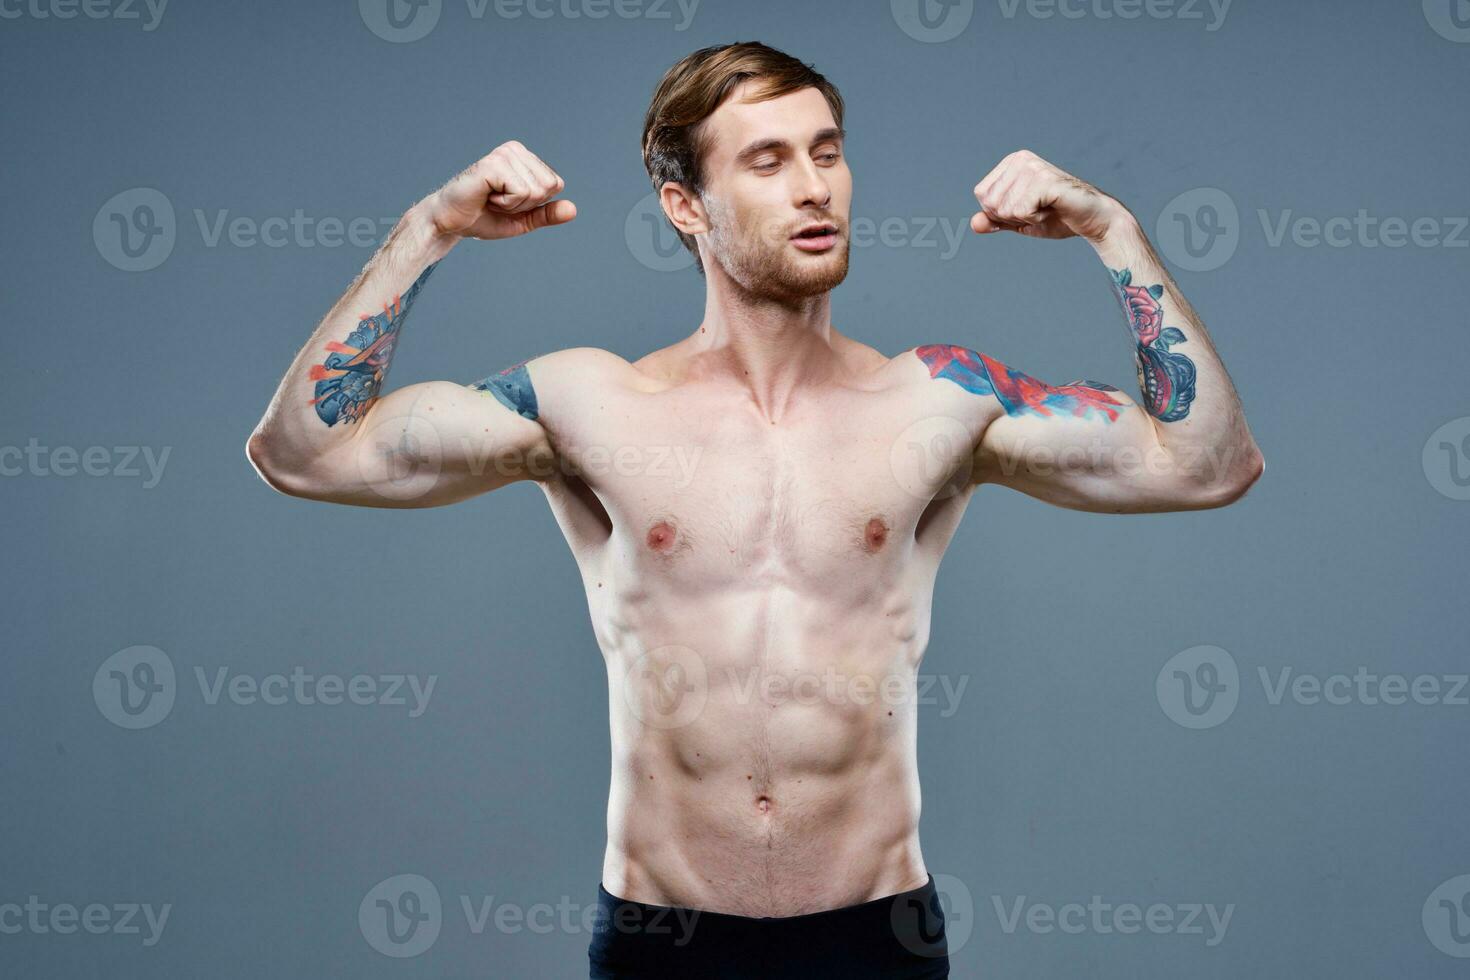 fuerte masculino atleta con bombeado arriba brazo músculos y tatuaje carrocero aptitud foto